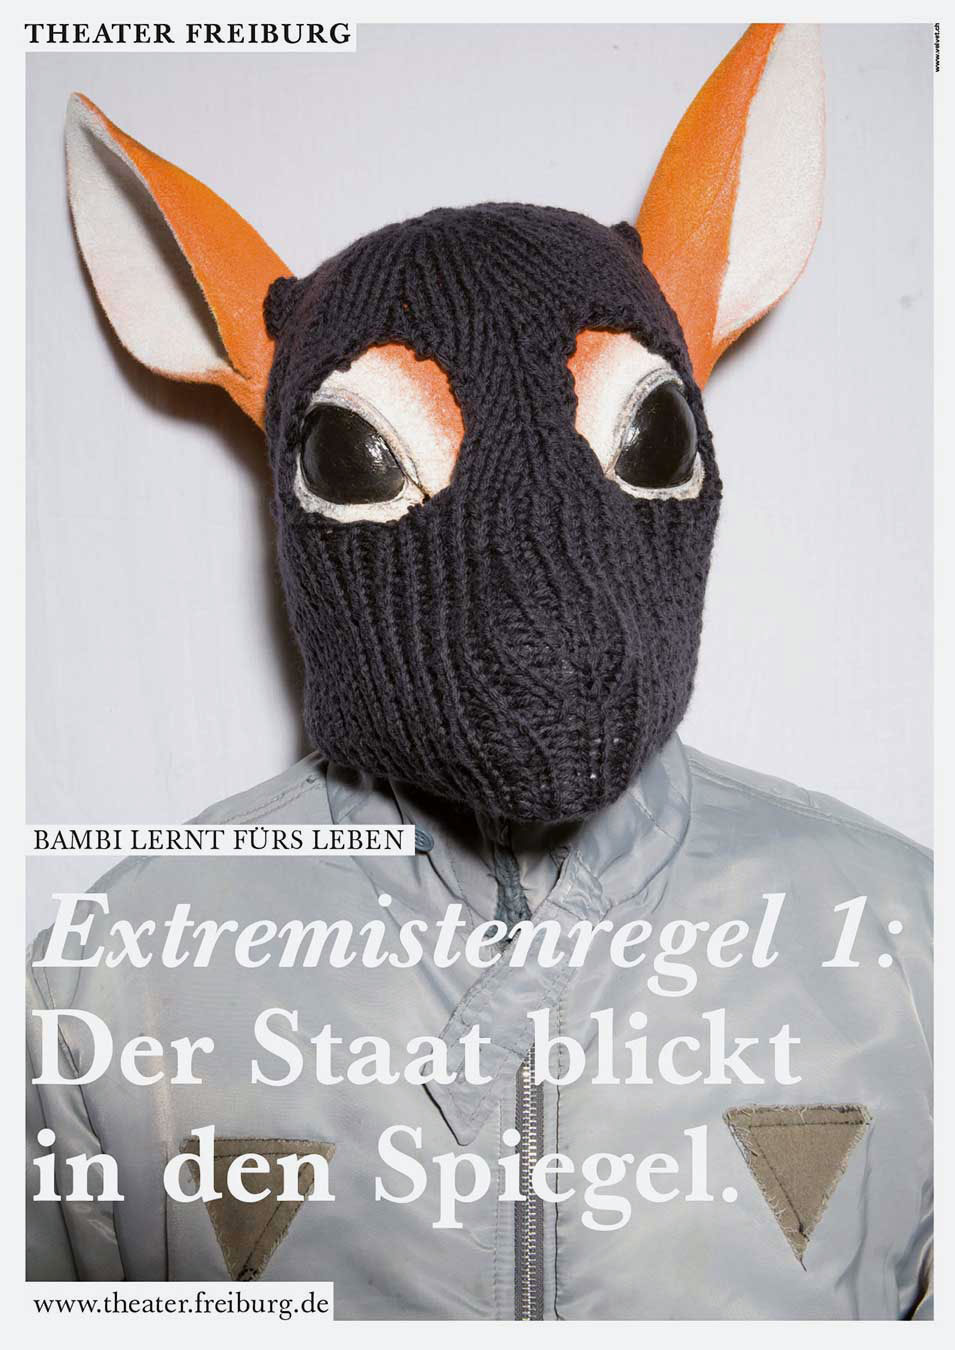 Theater Freiburg Bambi macht Theater Keyvisual Werbung